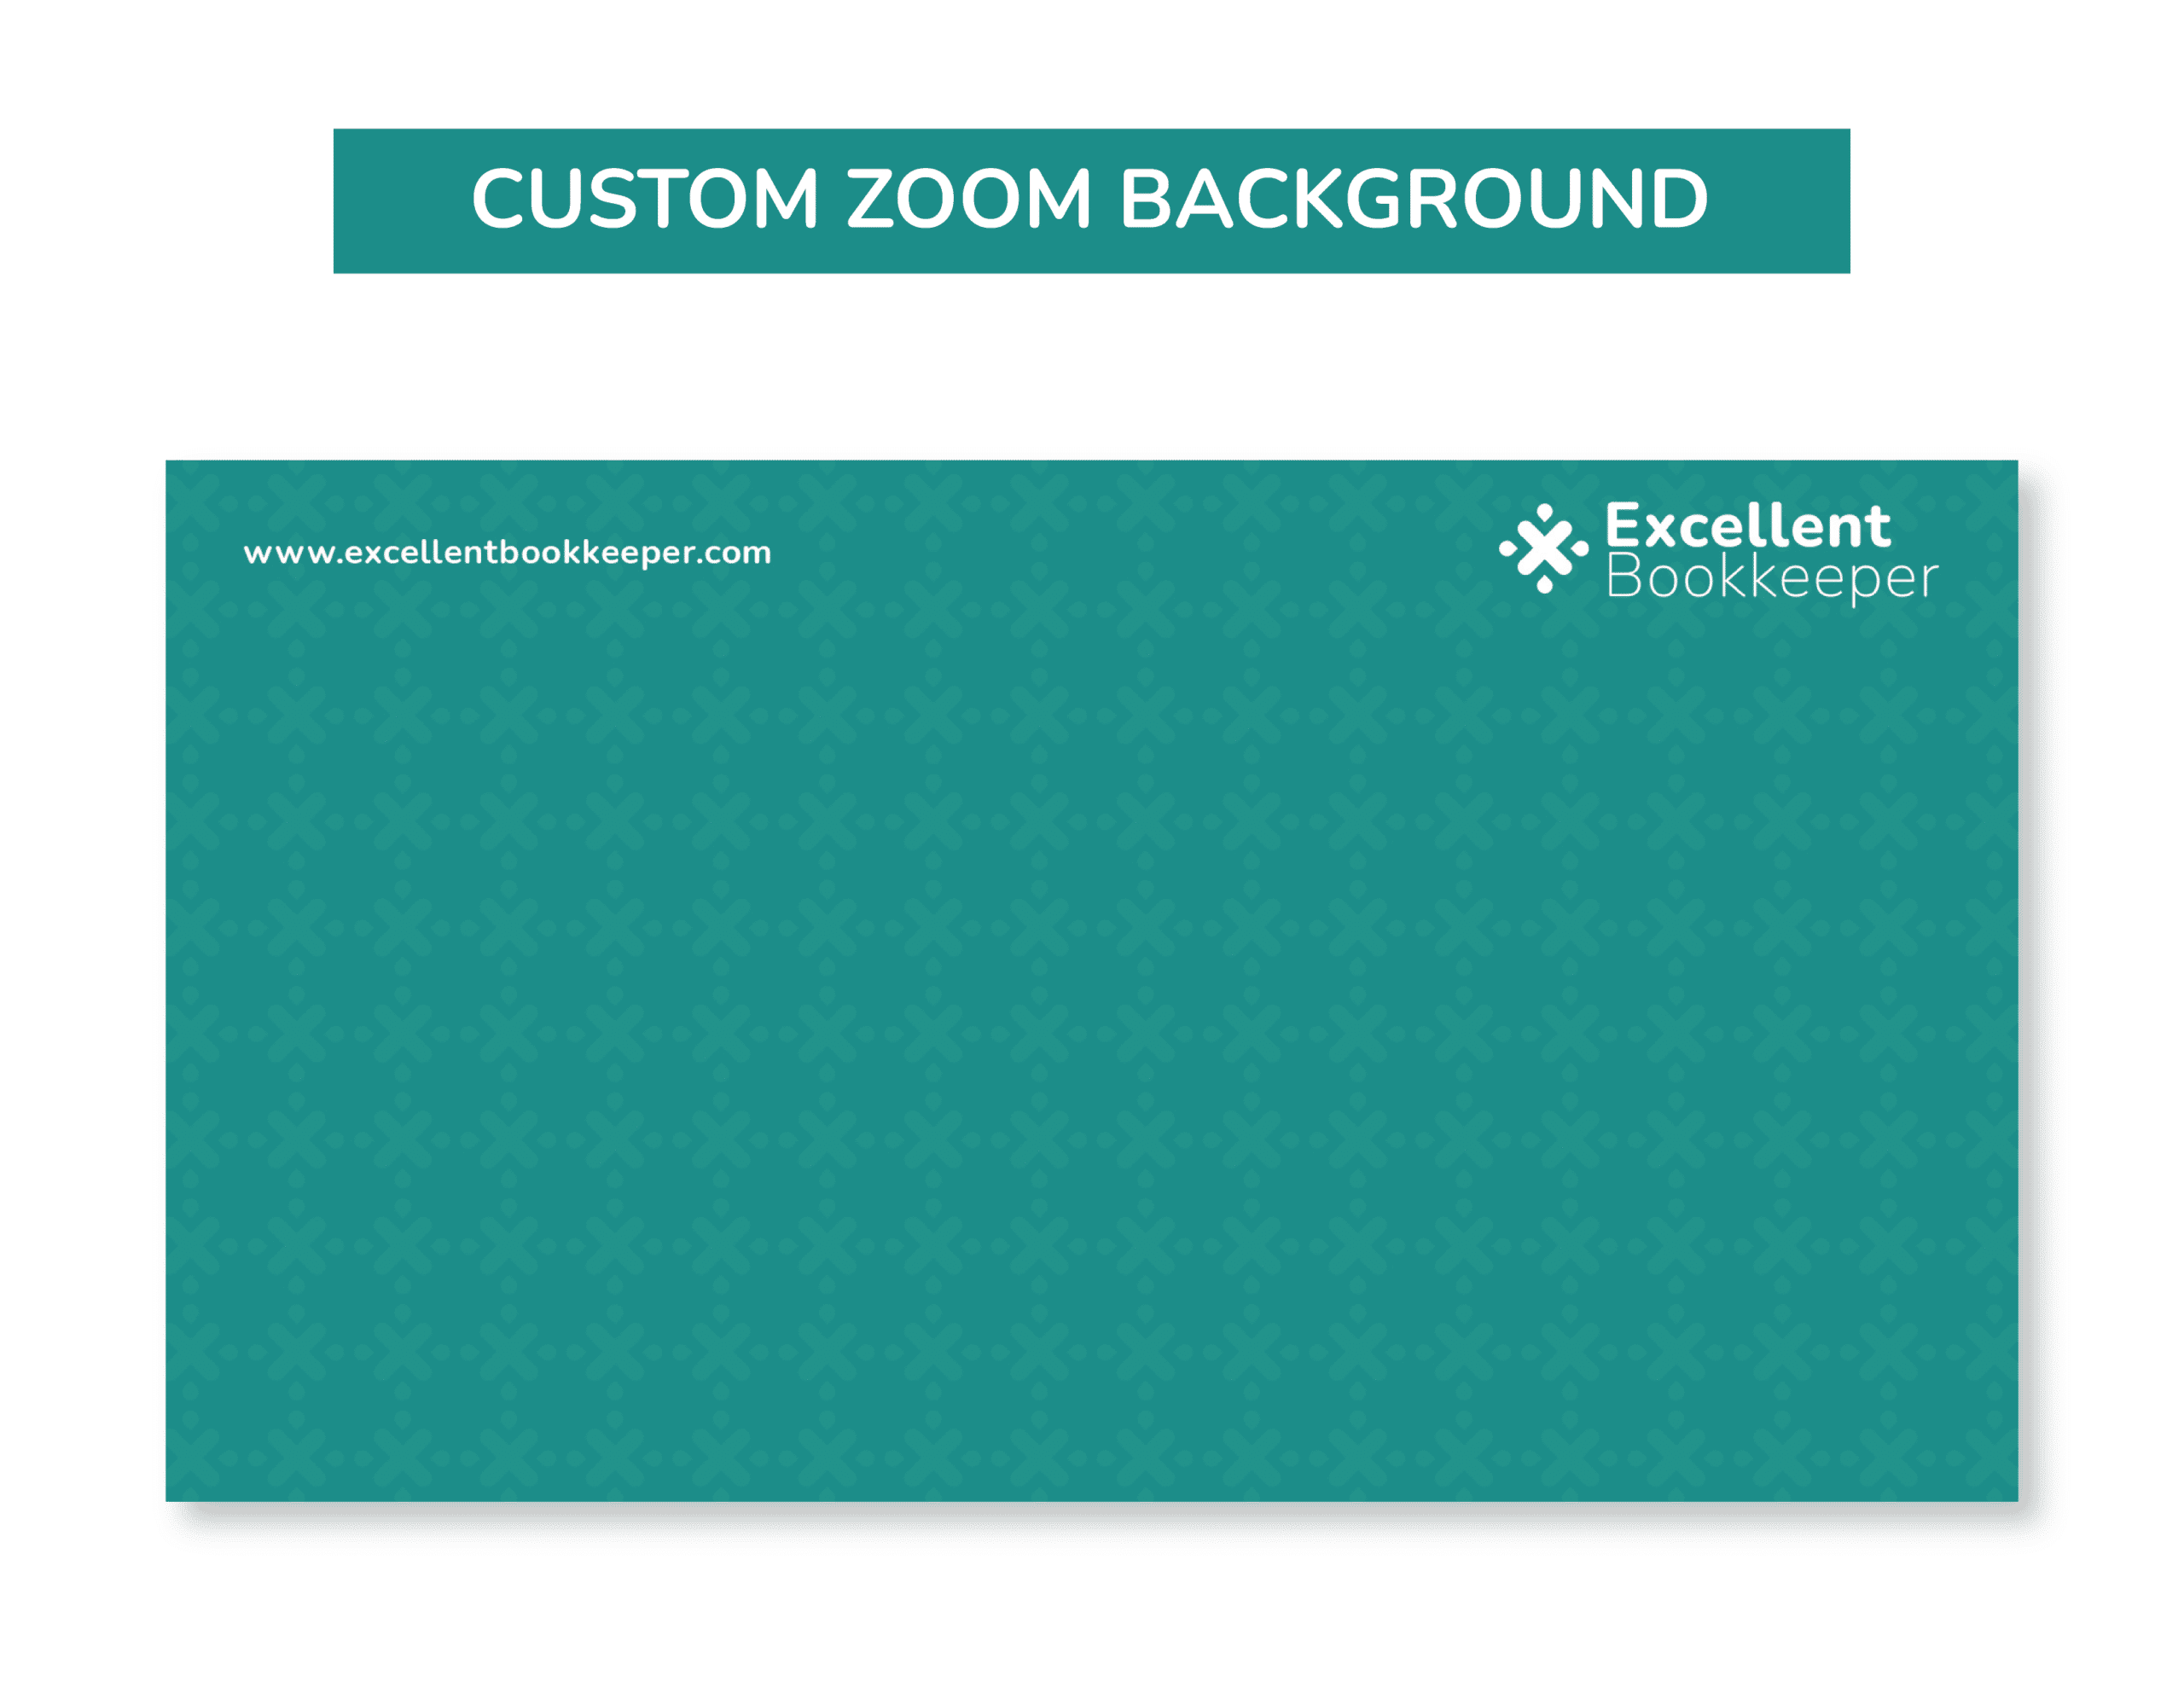 07Excellent__Custom Zoom Background